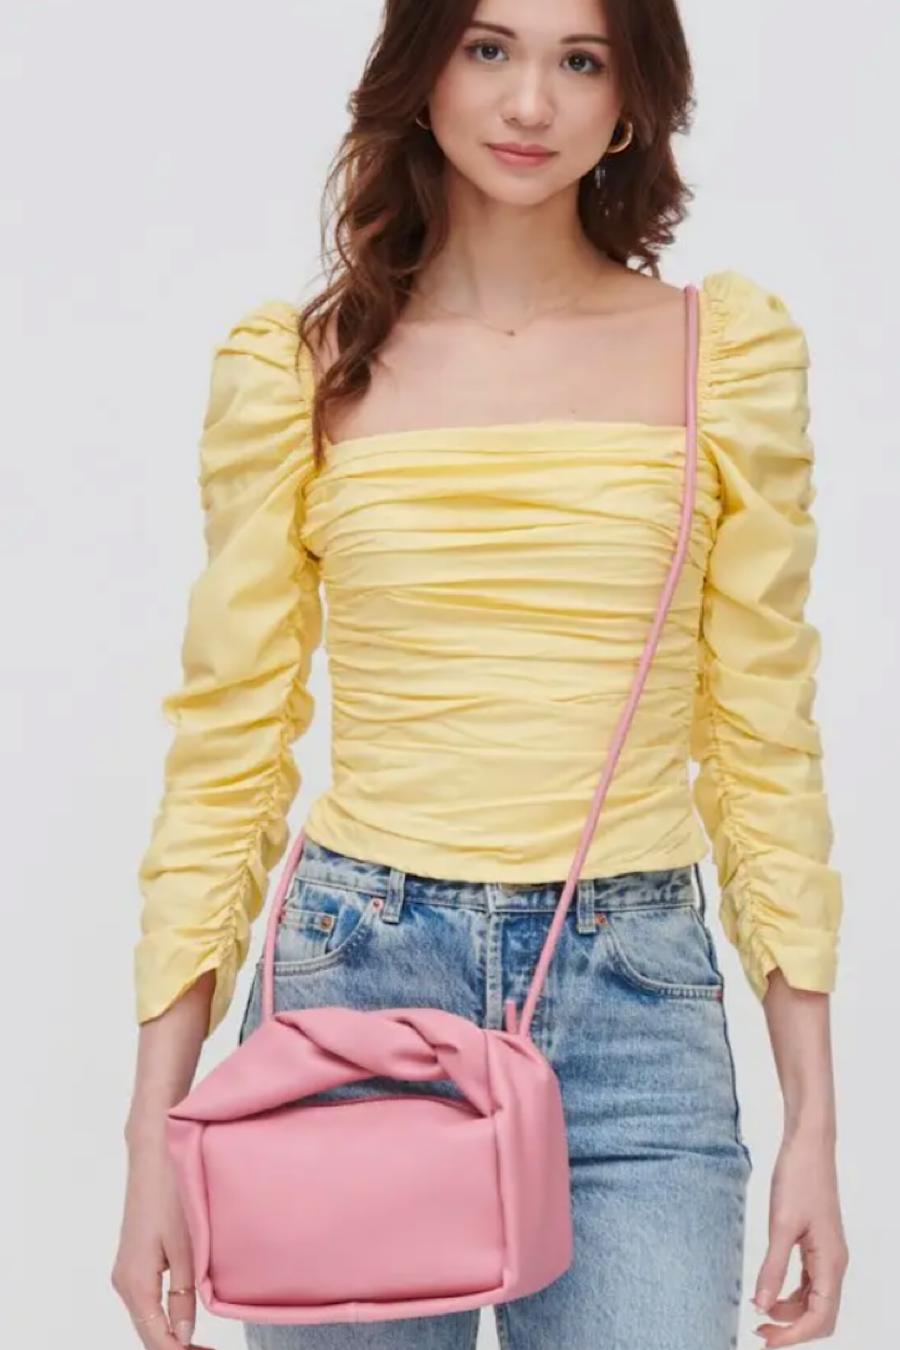 Zoelle Crossbody Handbag Pink